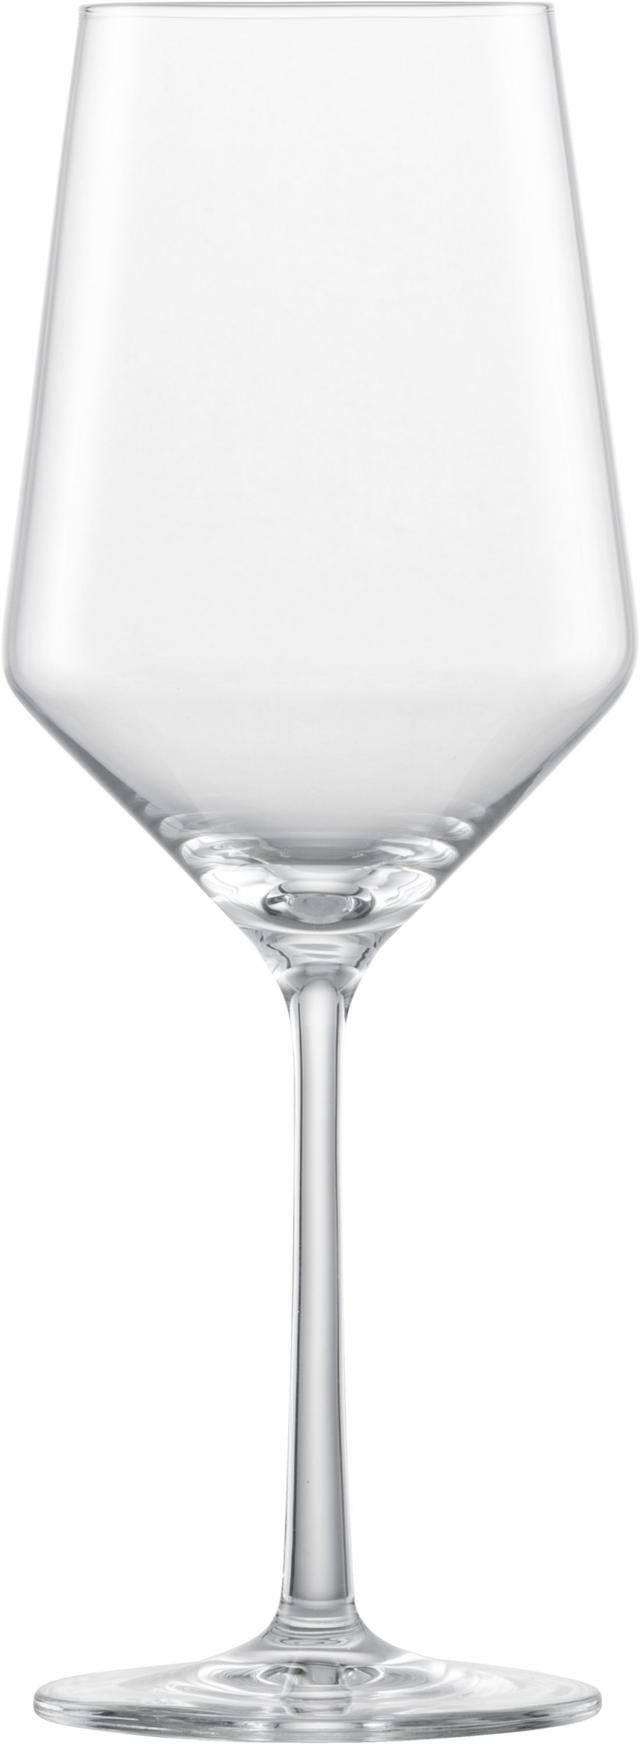 zwiesel glas pure cabernet wijnglas 1 - 0.55 ltr - geschenkverpakking 2 glazen